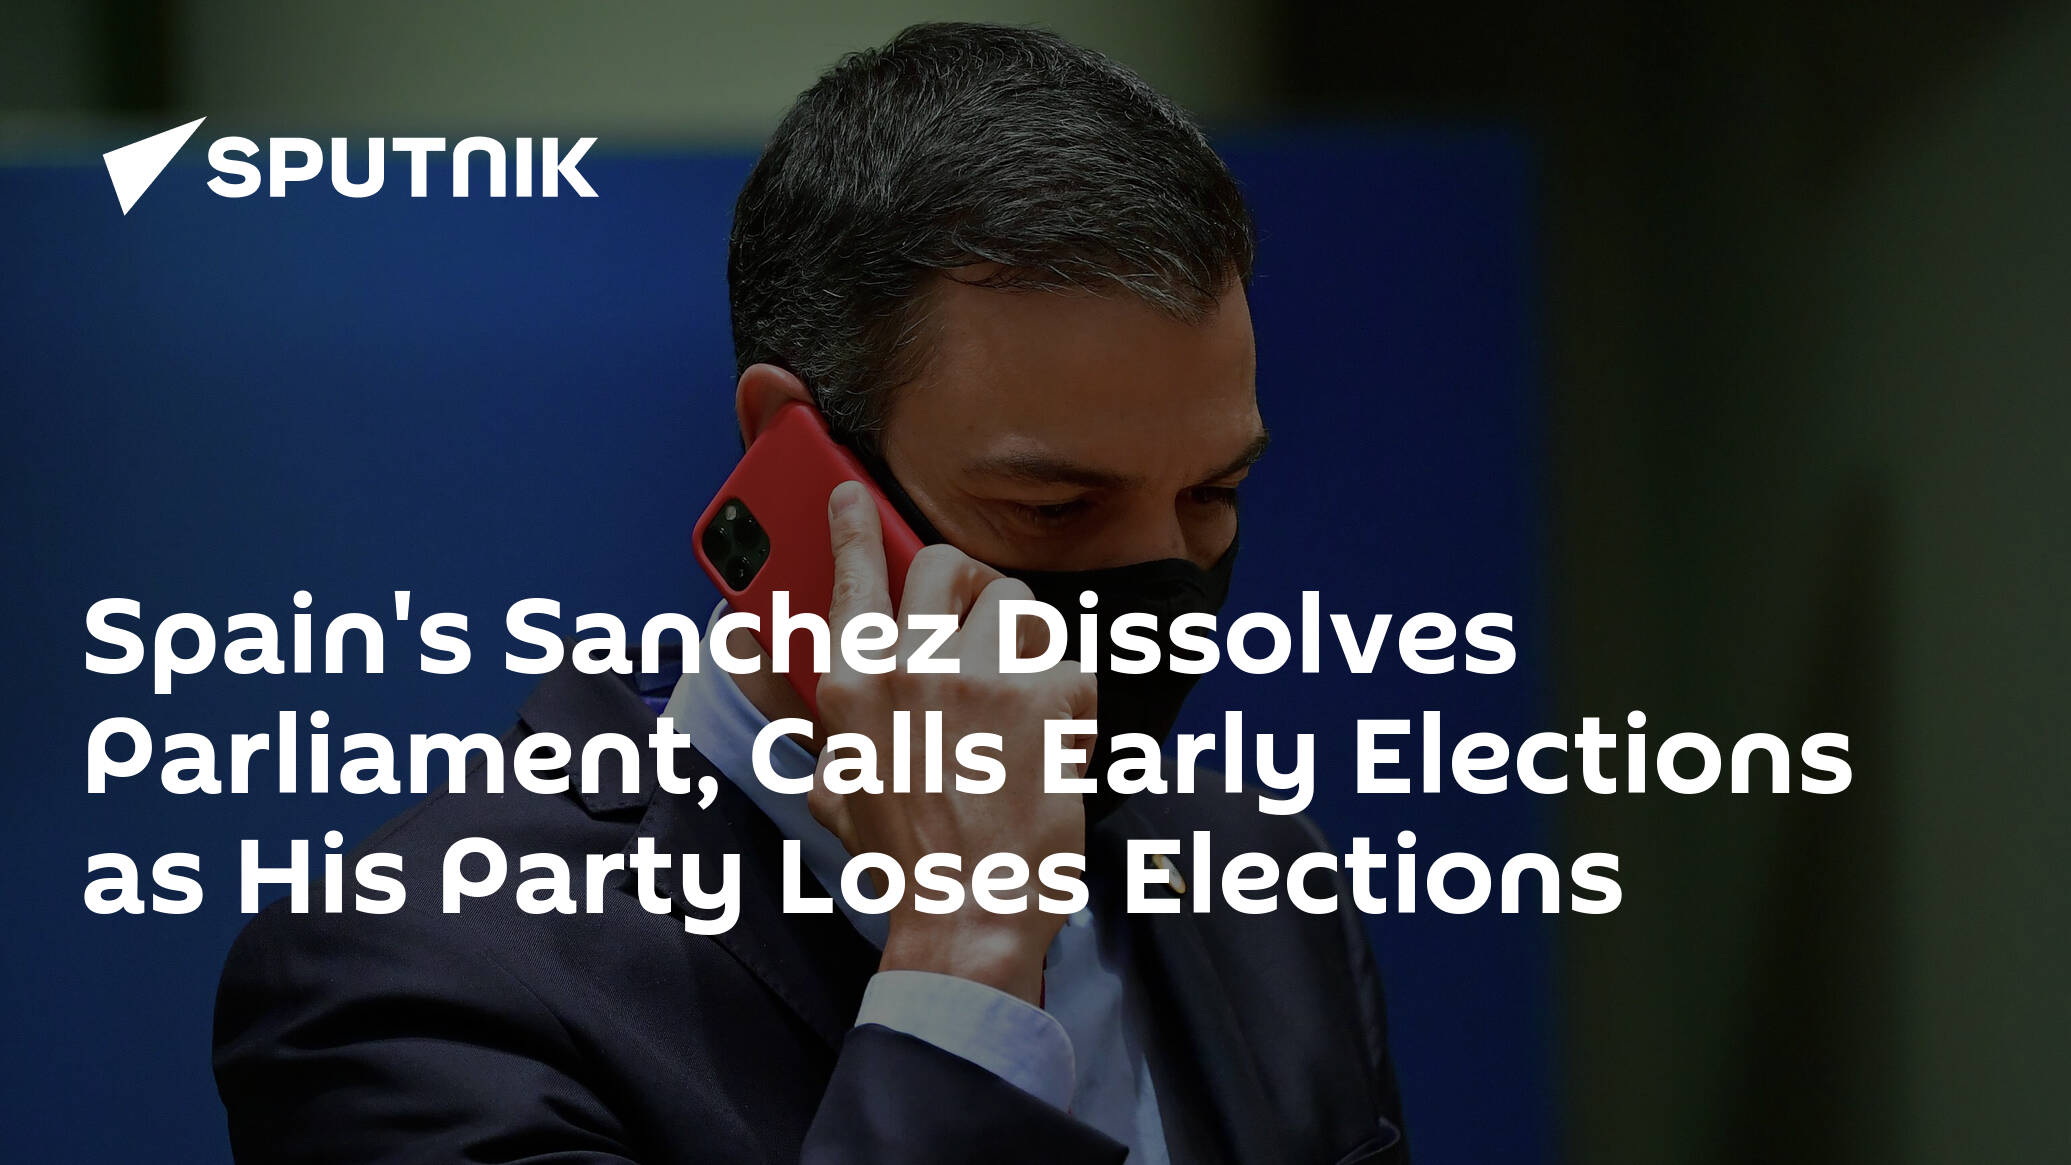 Spain's Sanchez Dissolves Parliament, Calls Early Elections as His Party Loses Elections